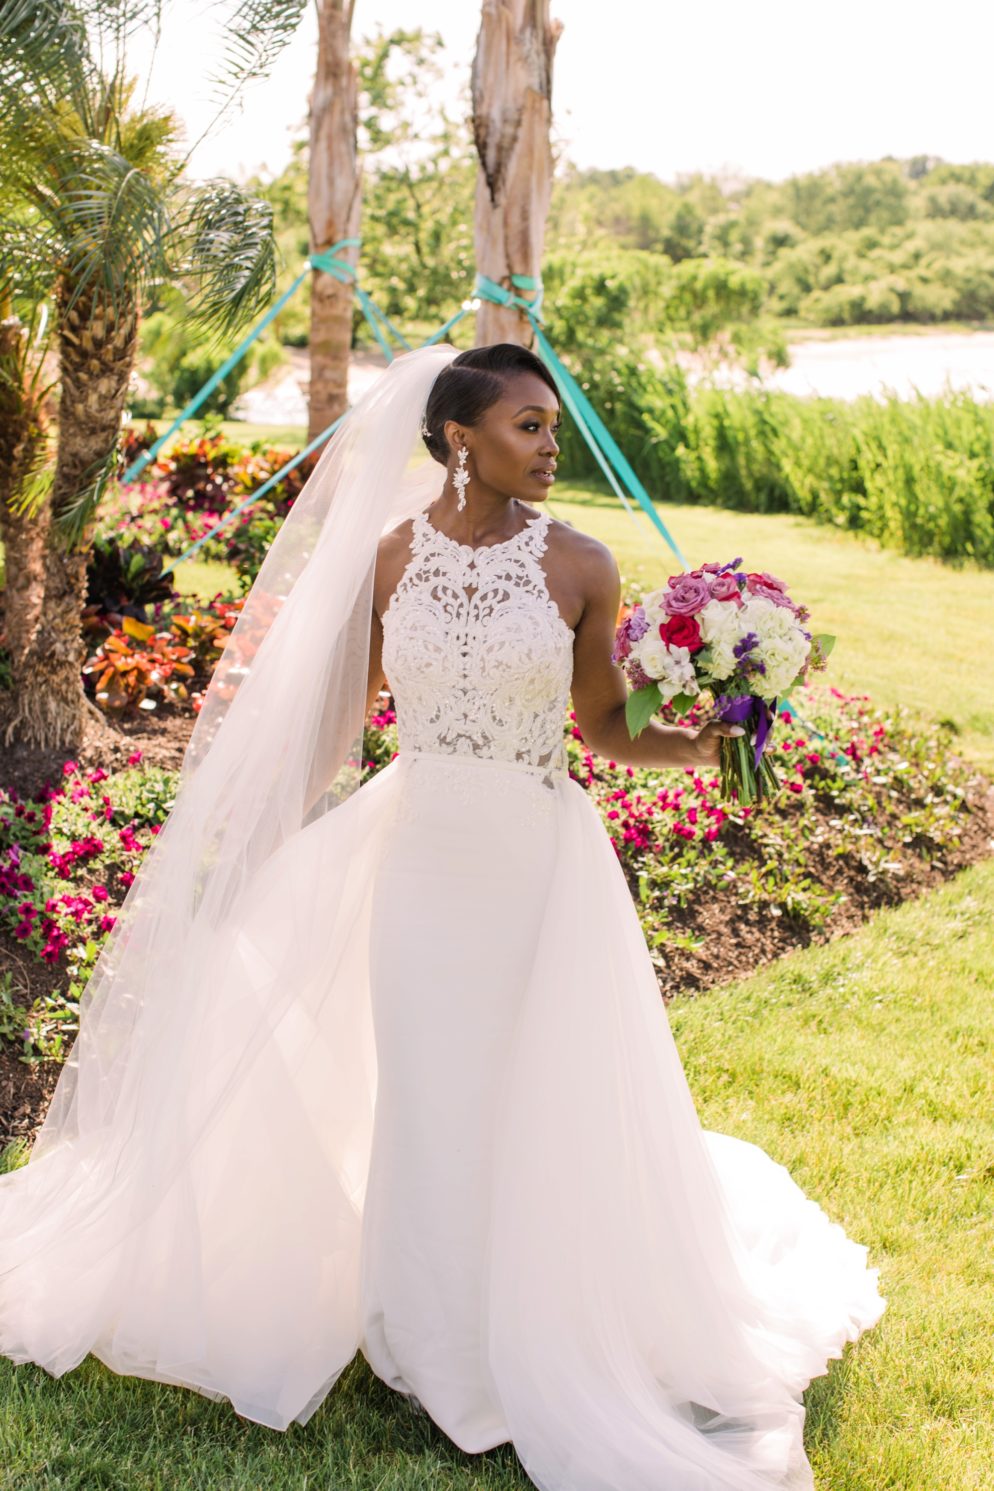 Inside America's wedding-dress obsession | Salon.com